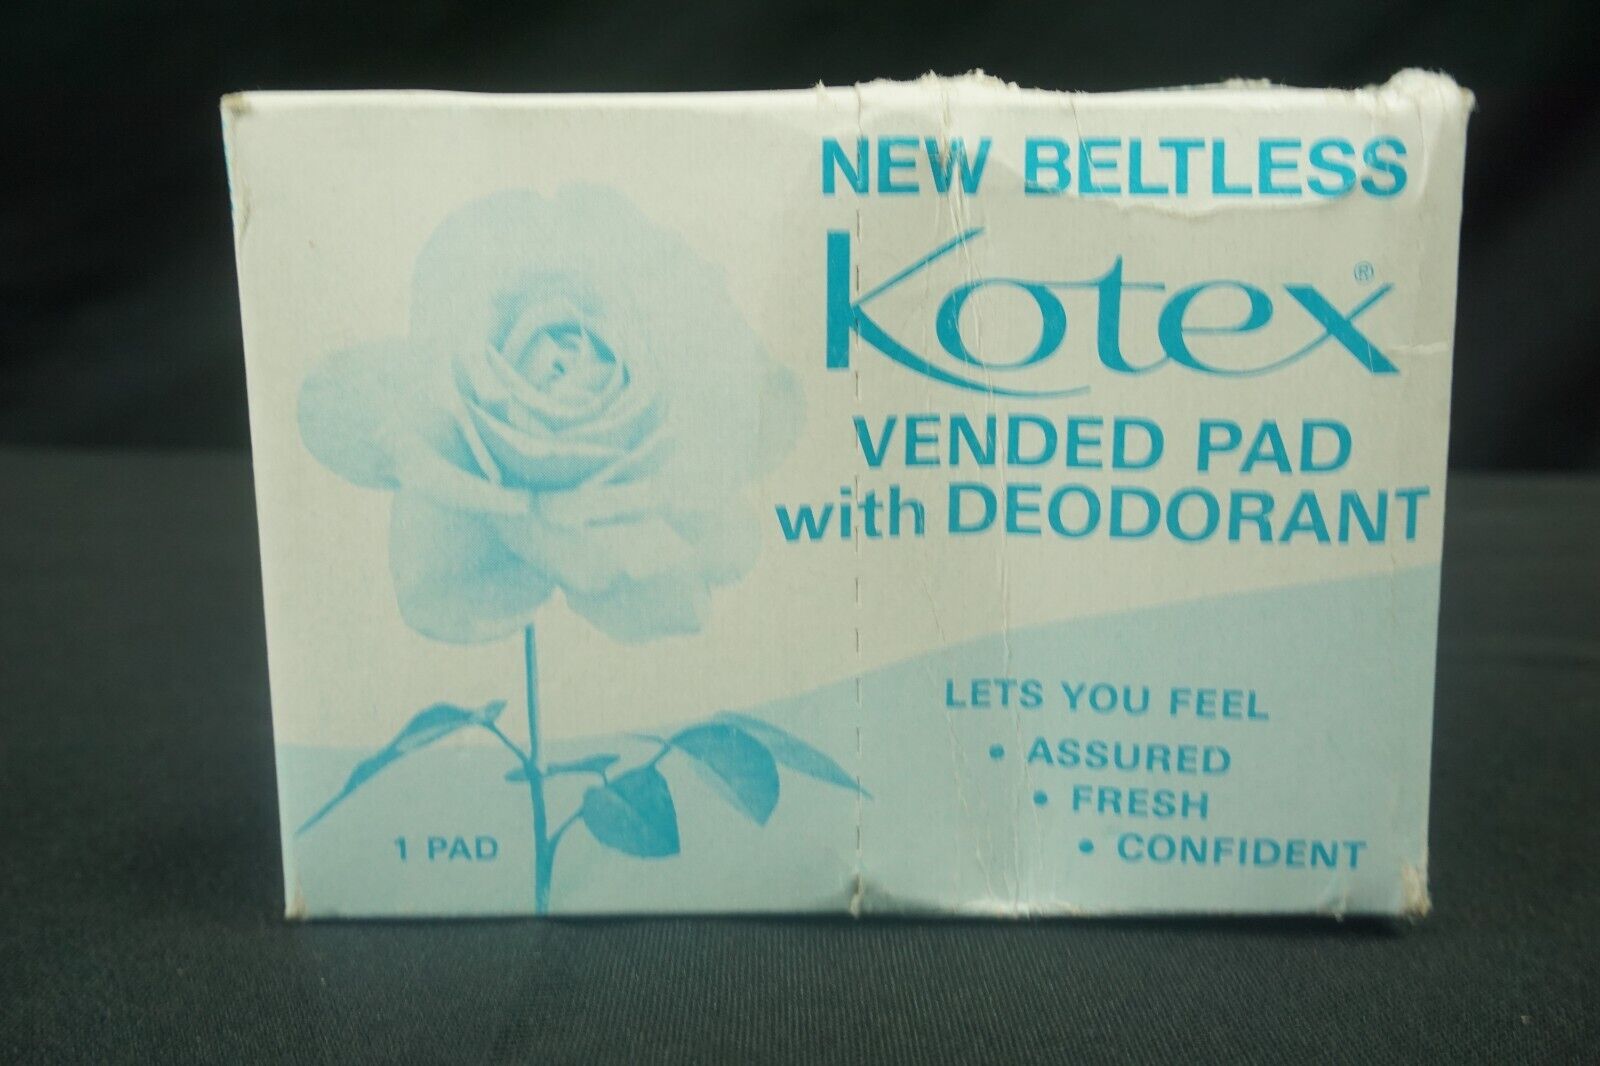 Vintage 1979 KOTEX Feminine Napkin Pad One Vended with Deodorant Beltless